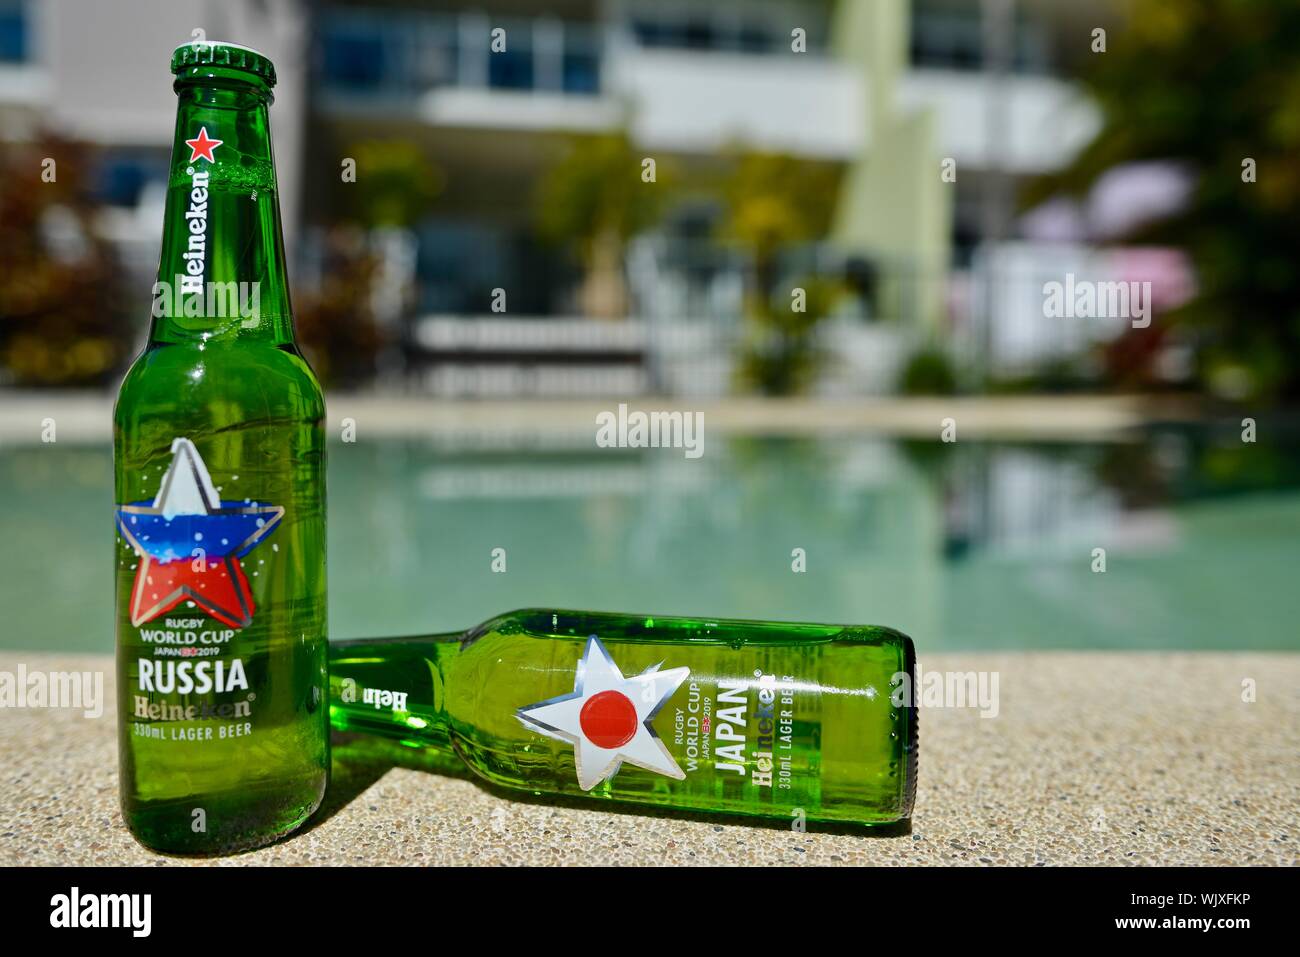 Japan versus Russia, Russia wins, Heineken 2019 Japan Rugby world cup beer bottles Stock Photo